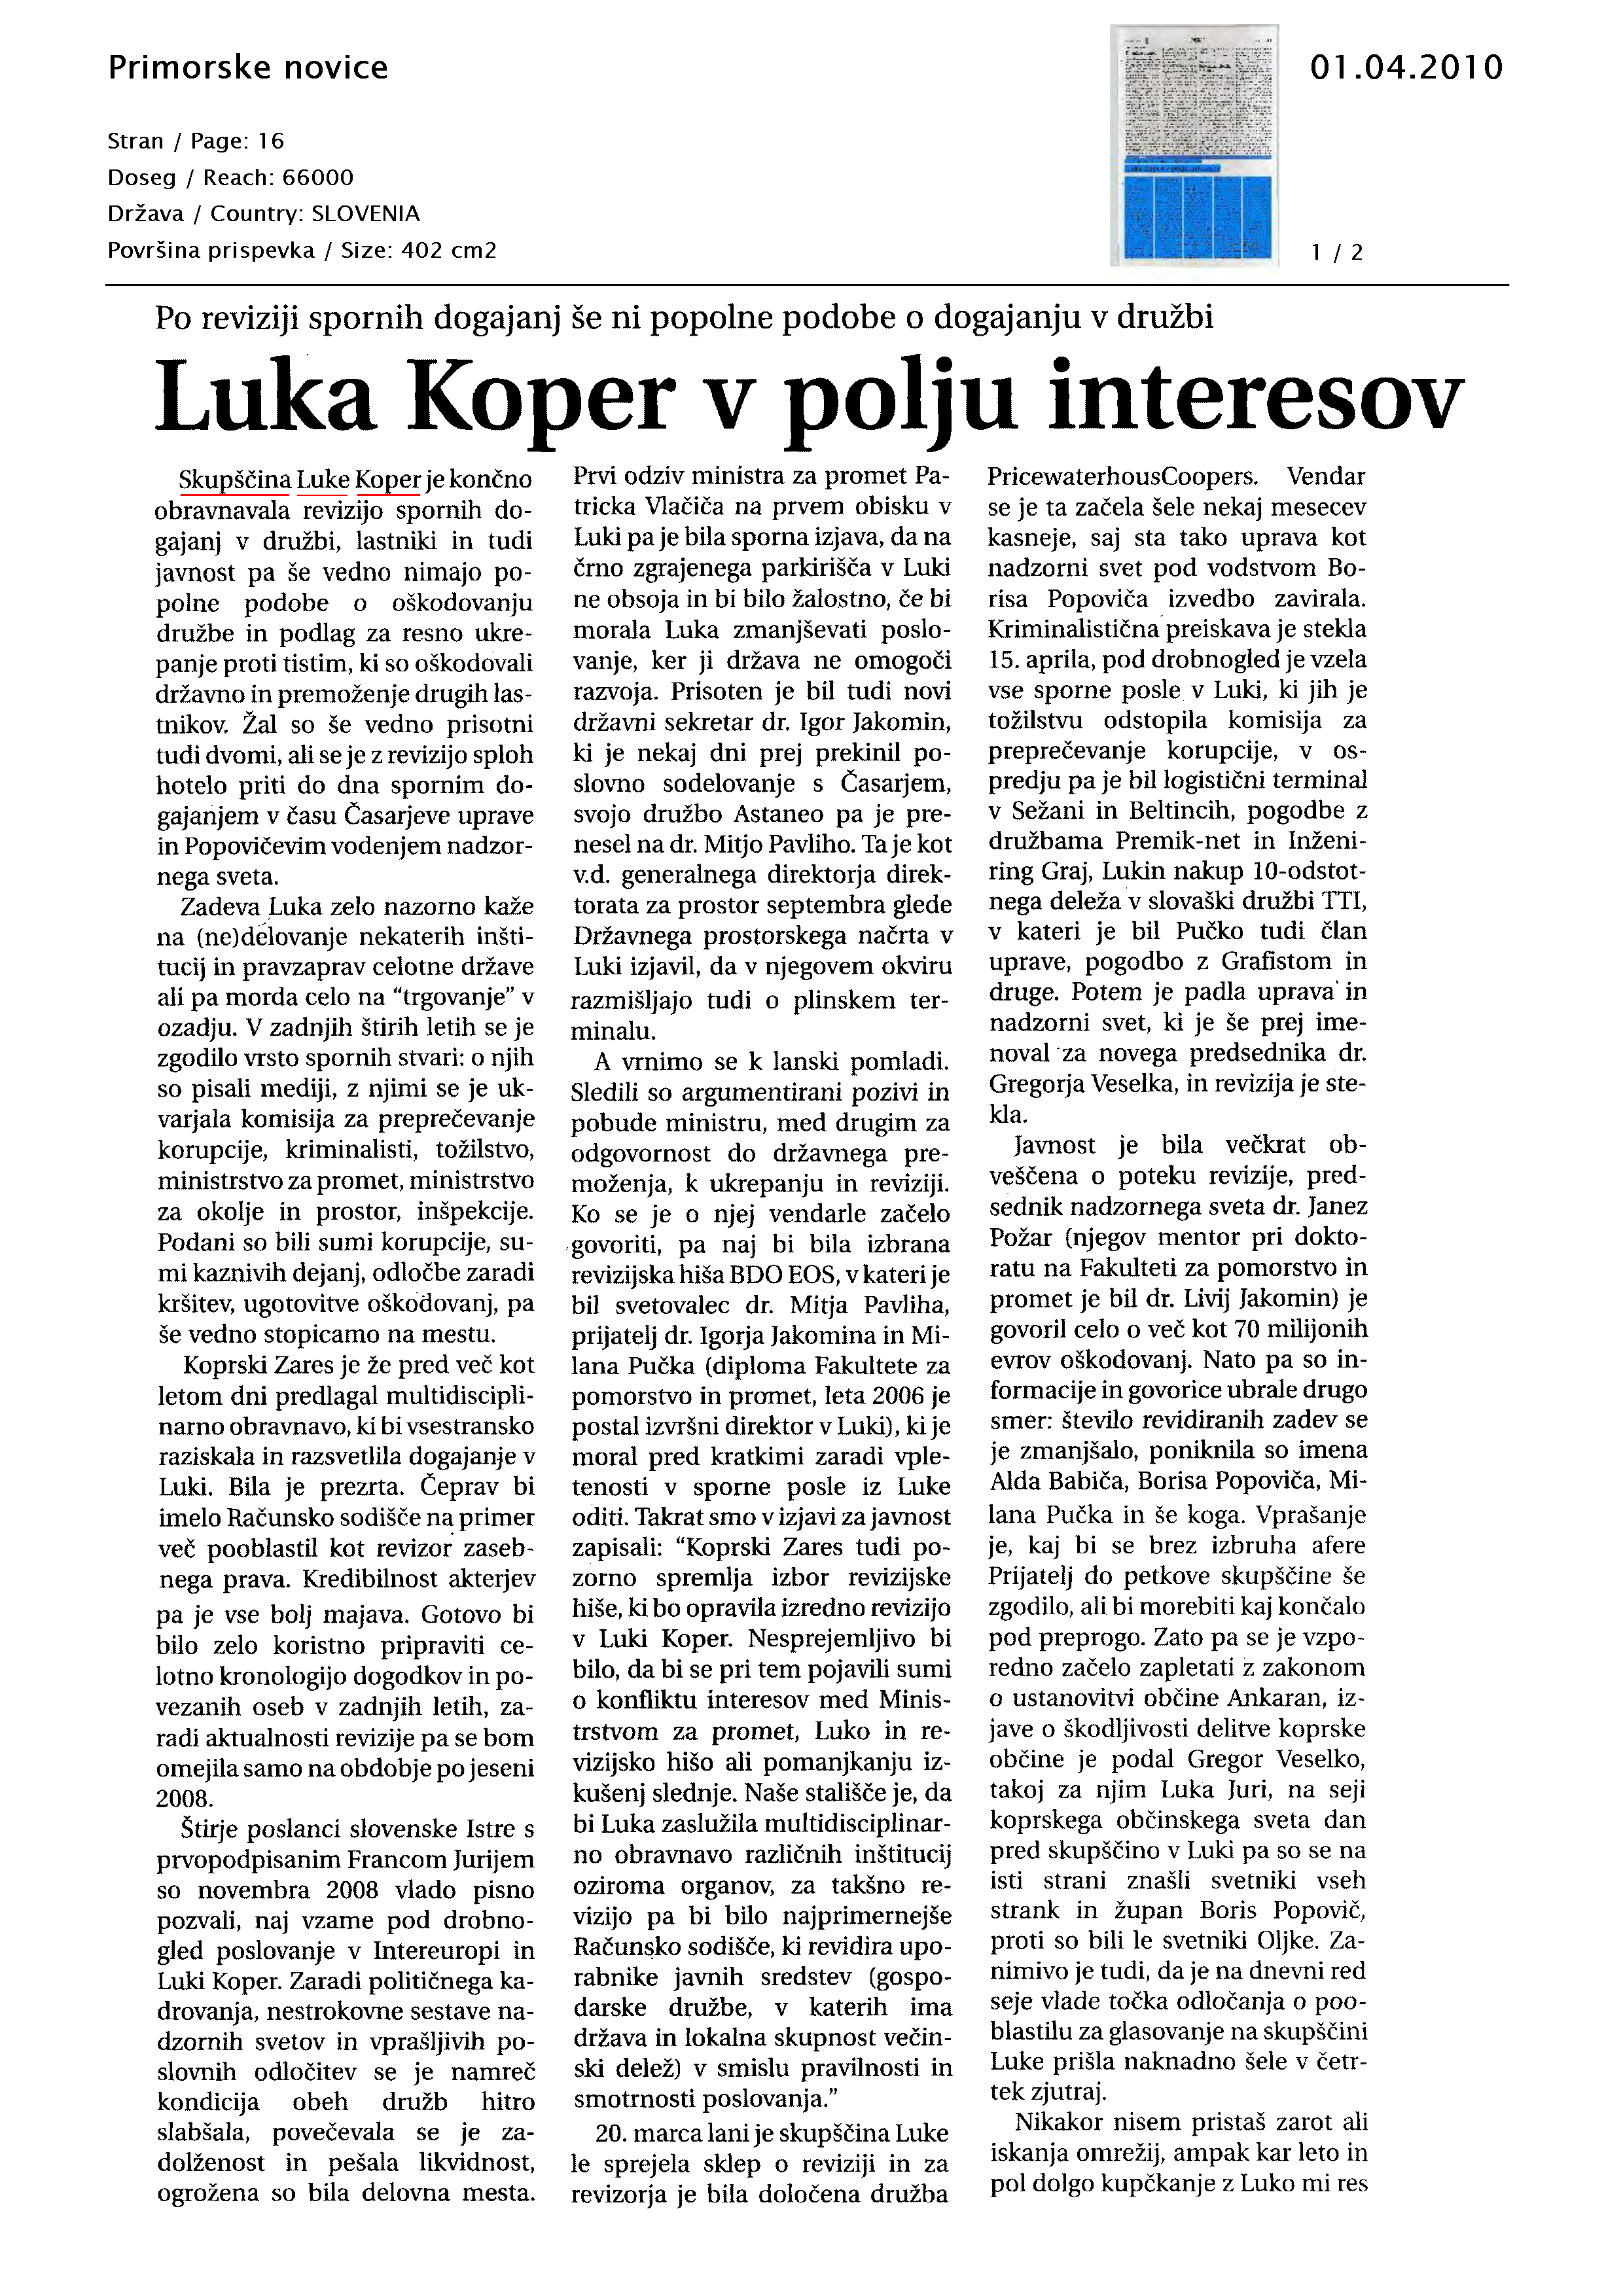 Luka_Koper_v_polju_interesov1_Page_1